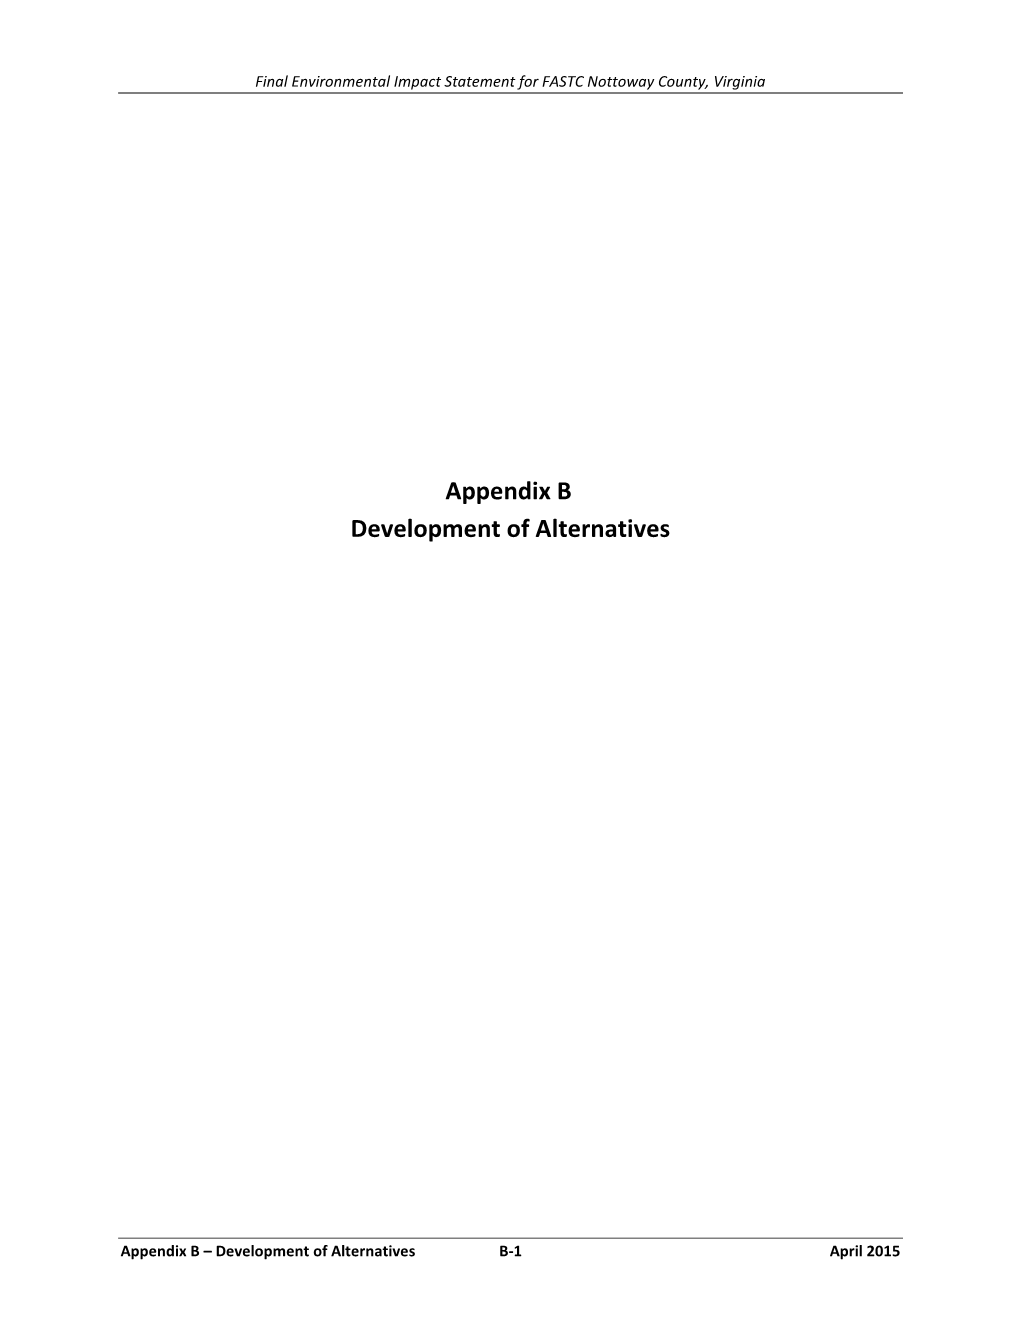 Appendix B Development of Alternatives